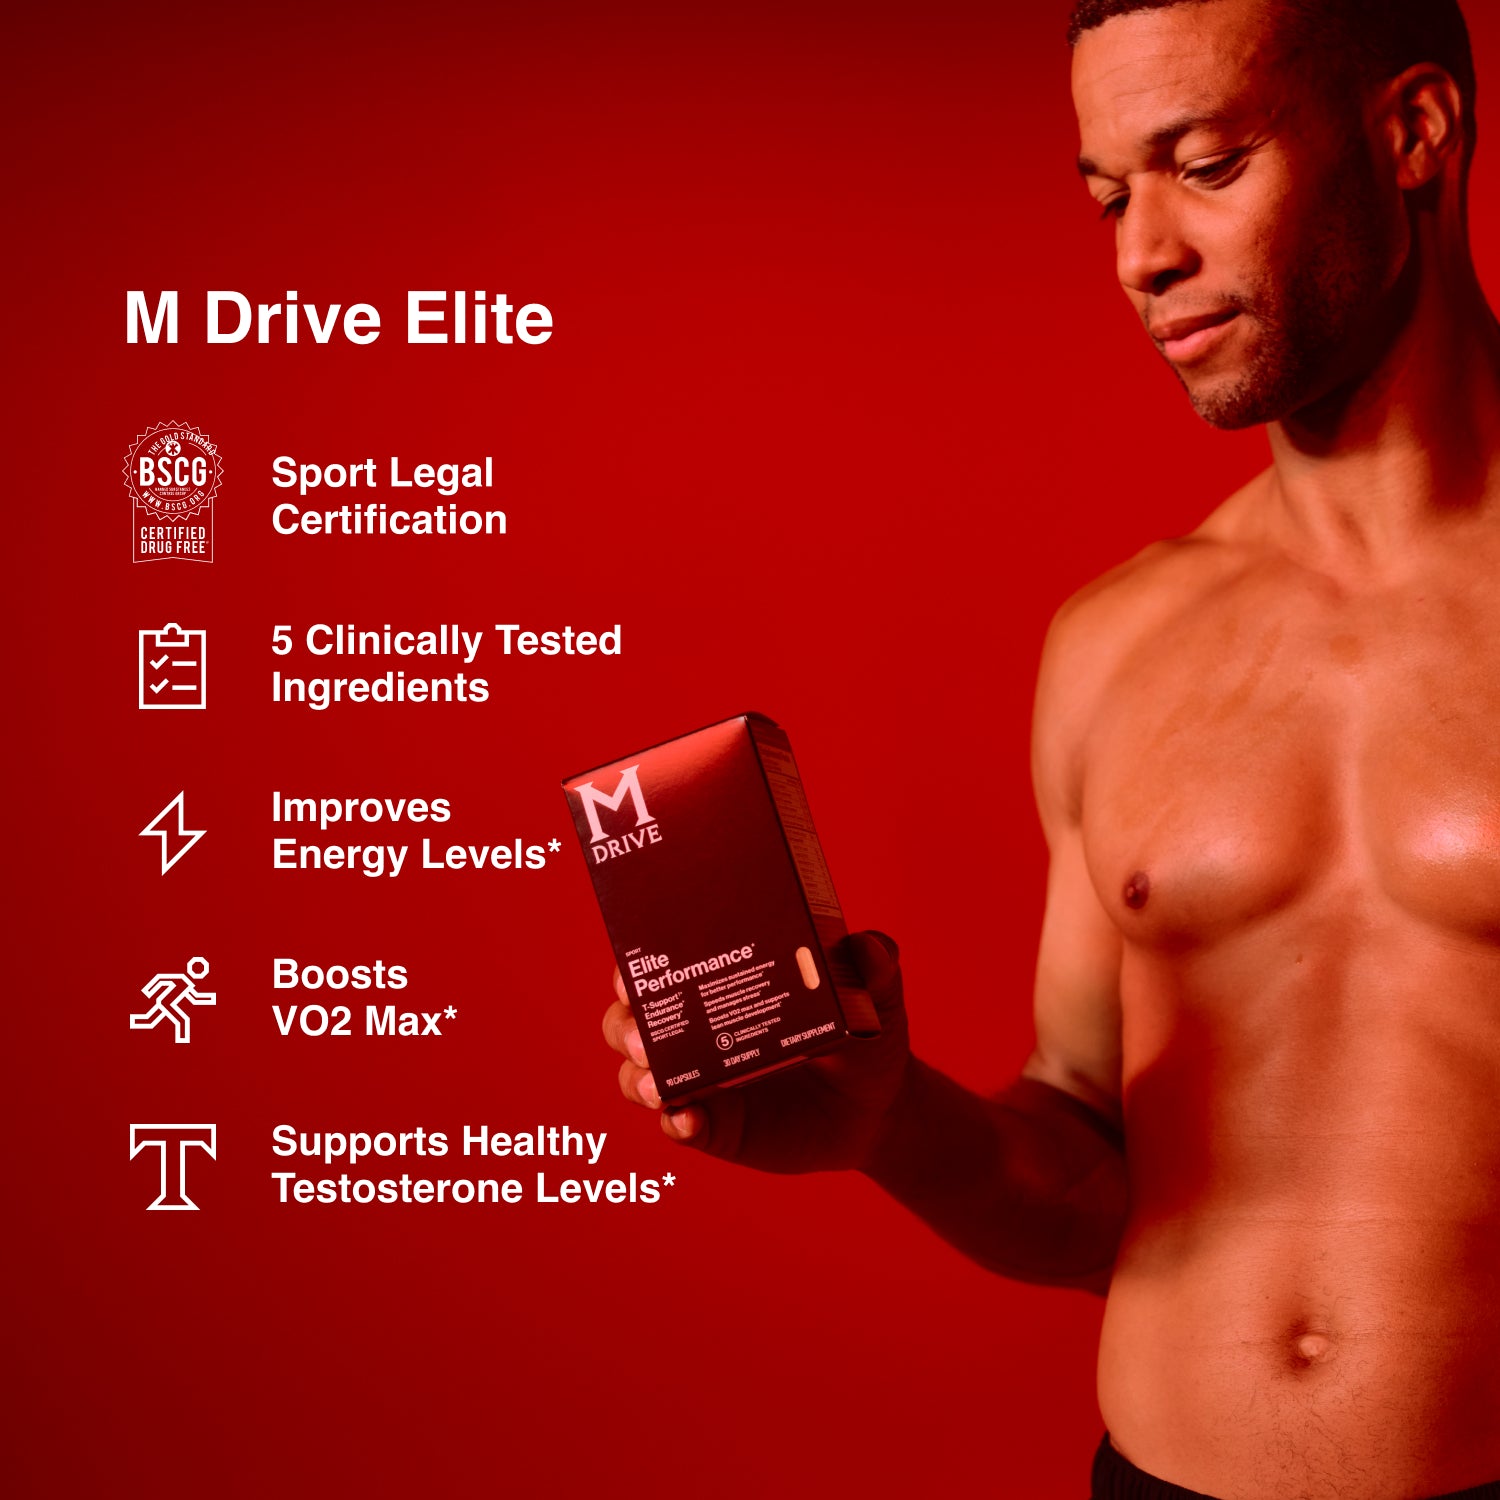 M Drive Elite Benefits